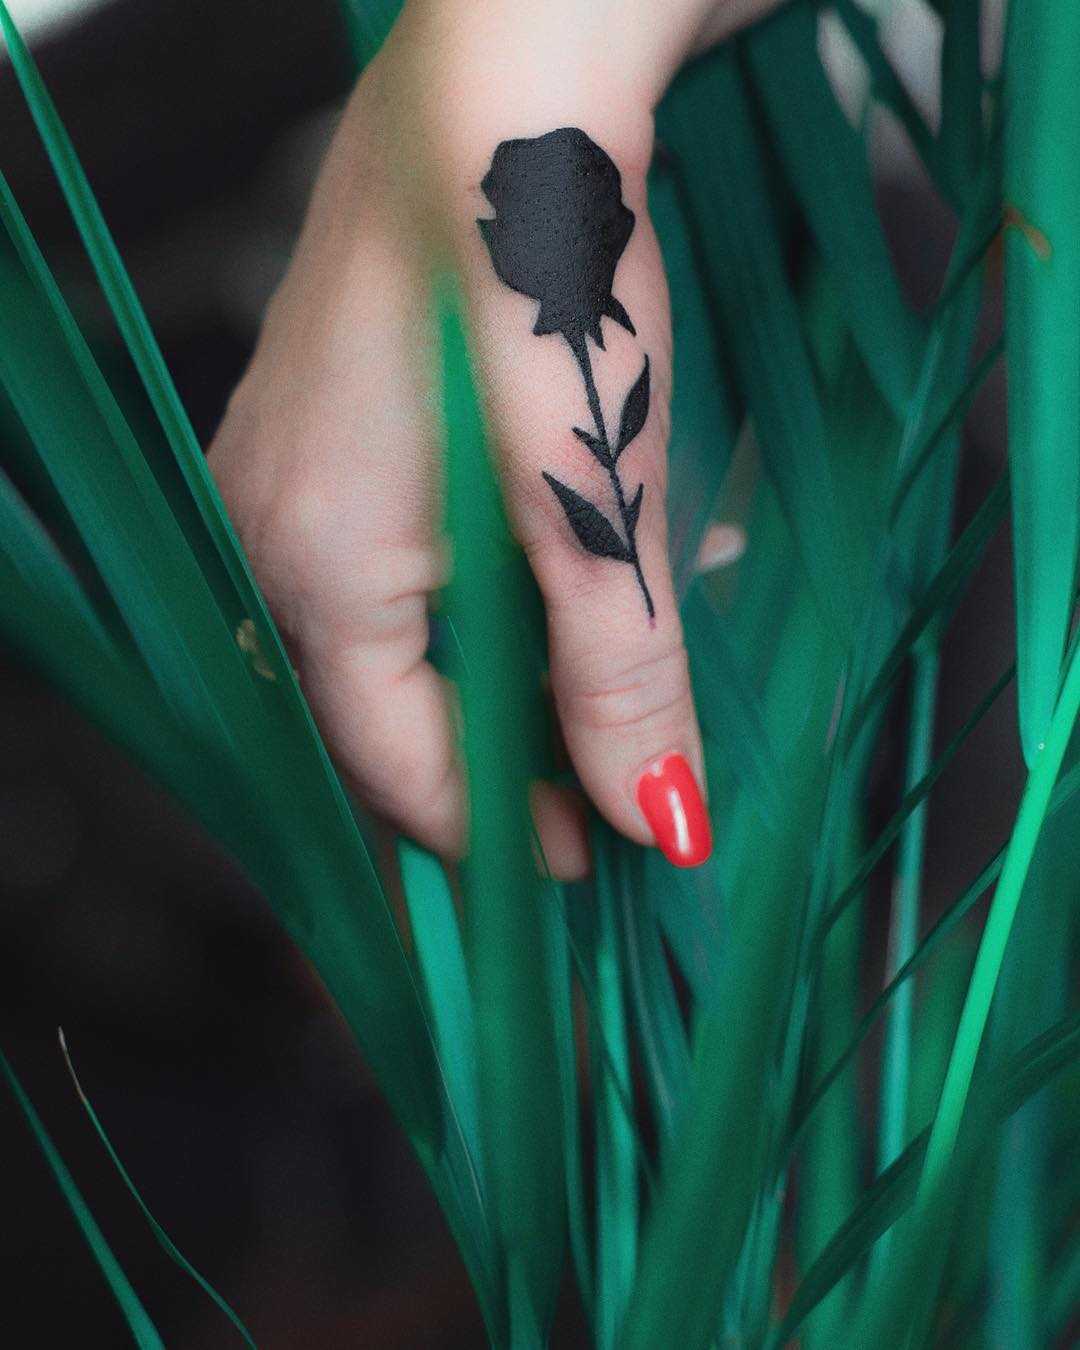 Intense black rose by Dżudi Bazgrole